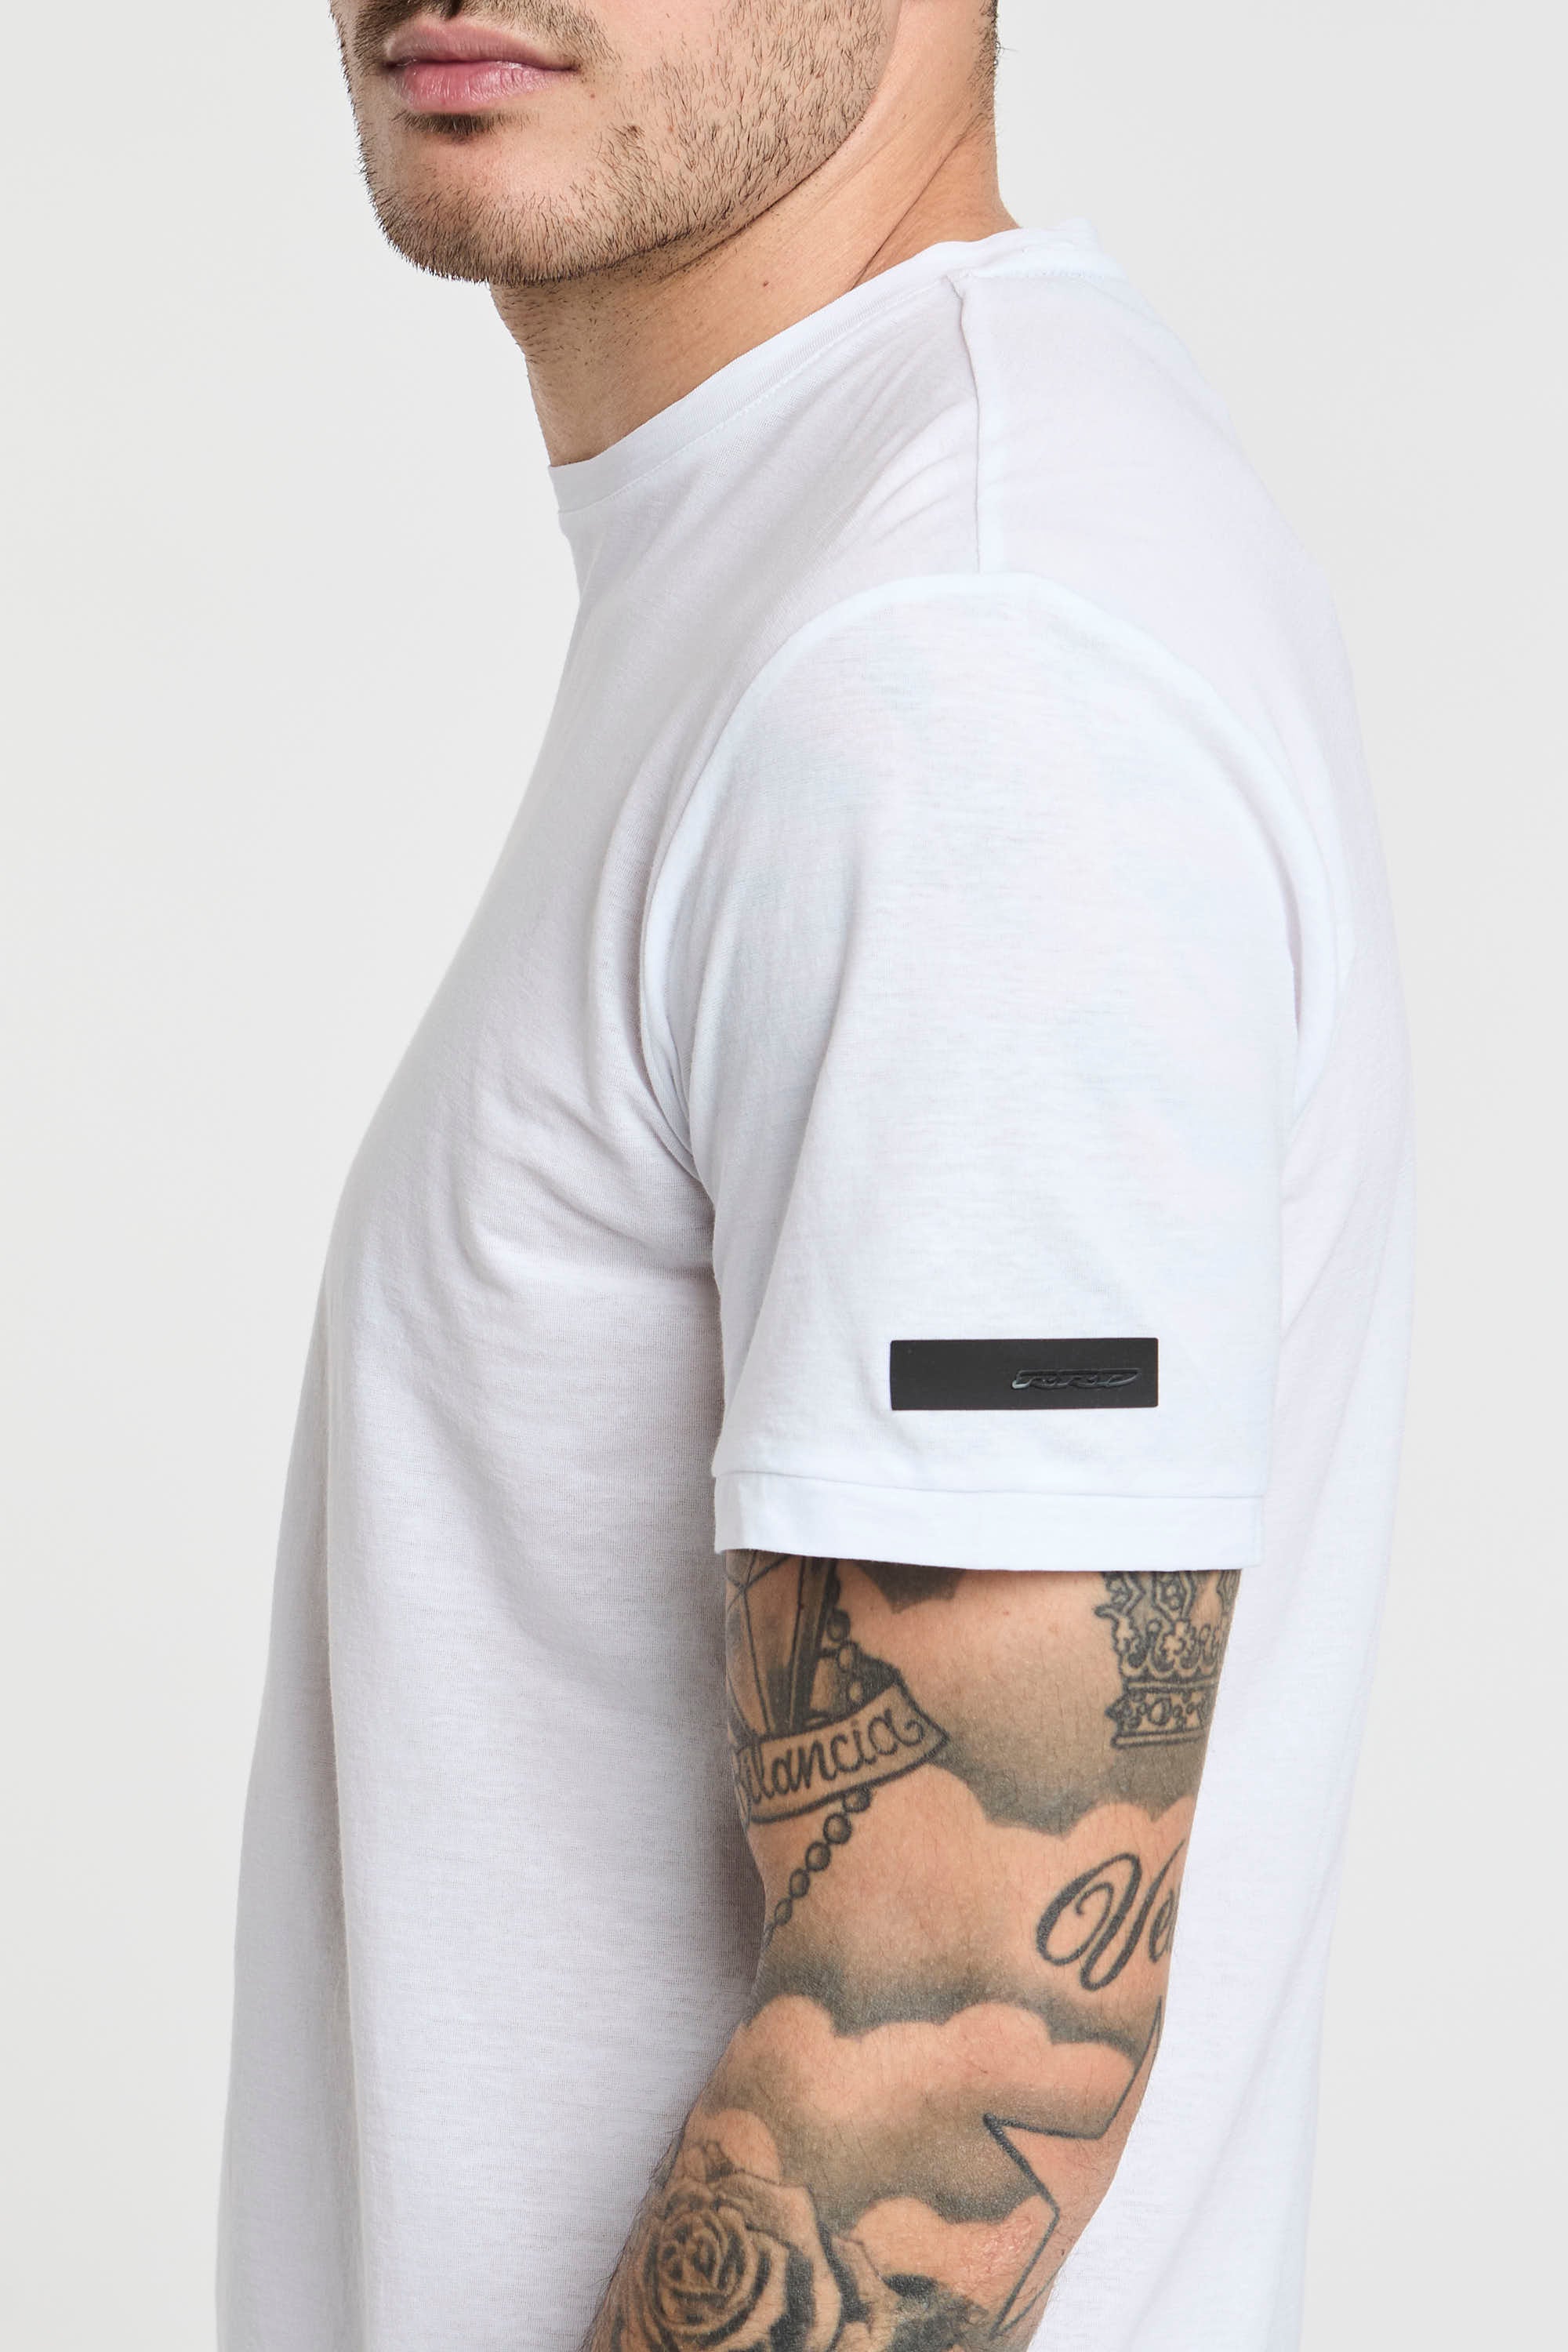 RRD T-Shirt Crepe Shirty Baumwolle Weiß-5